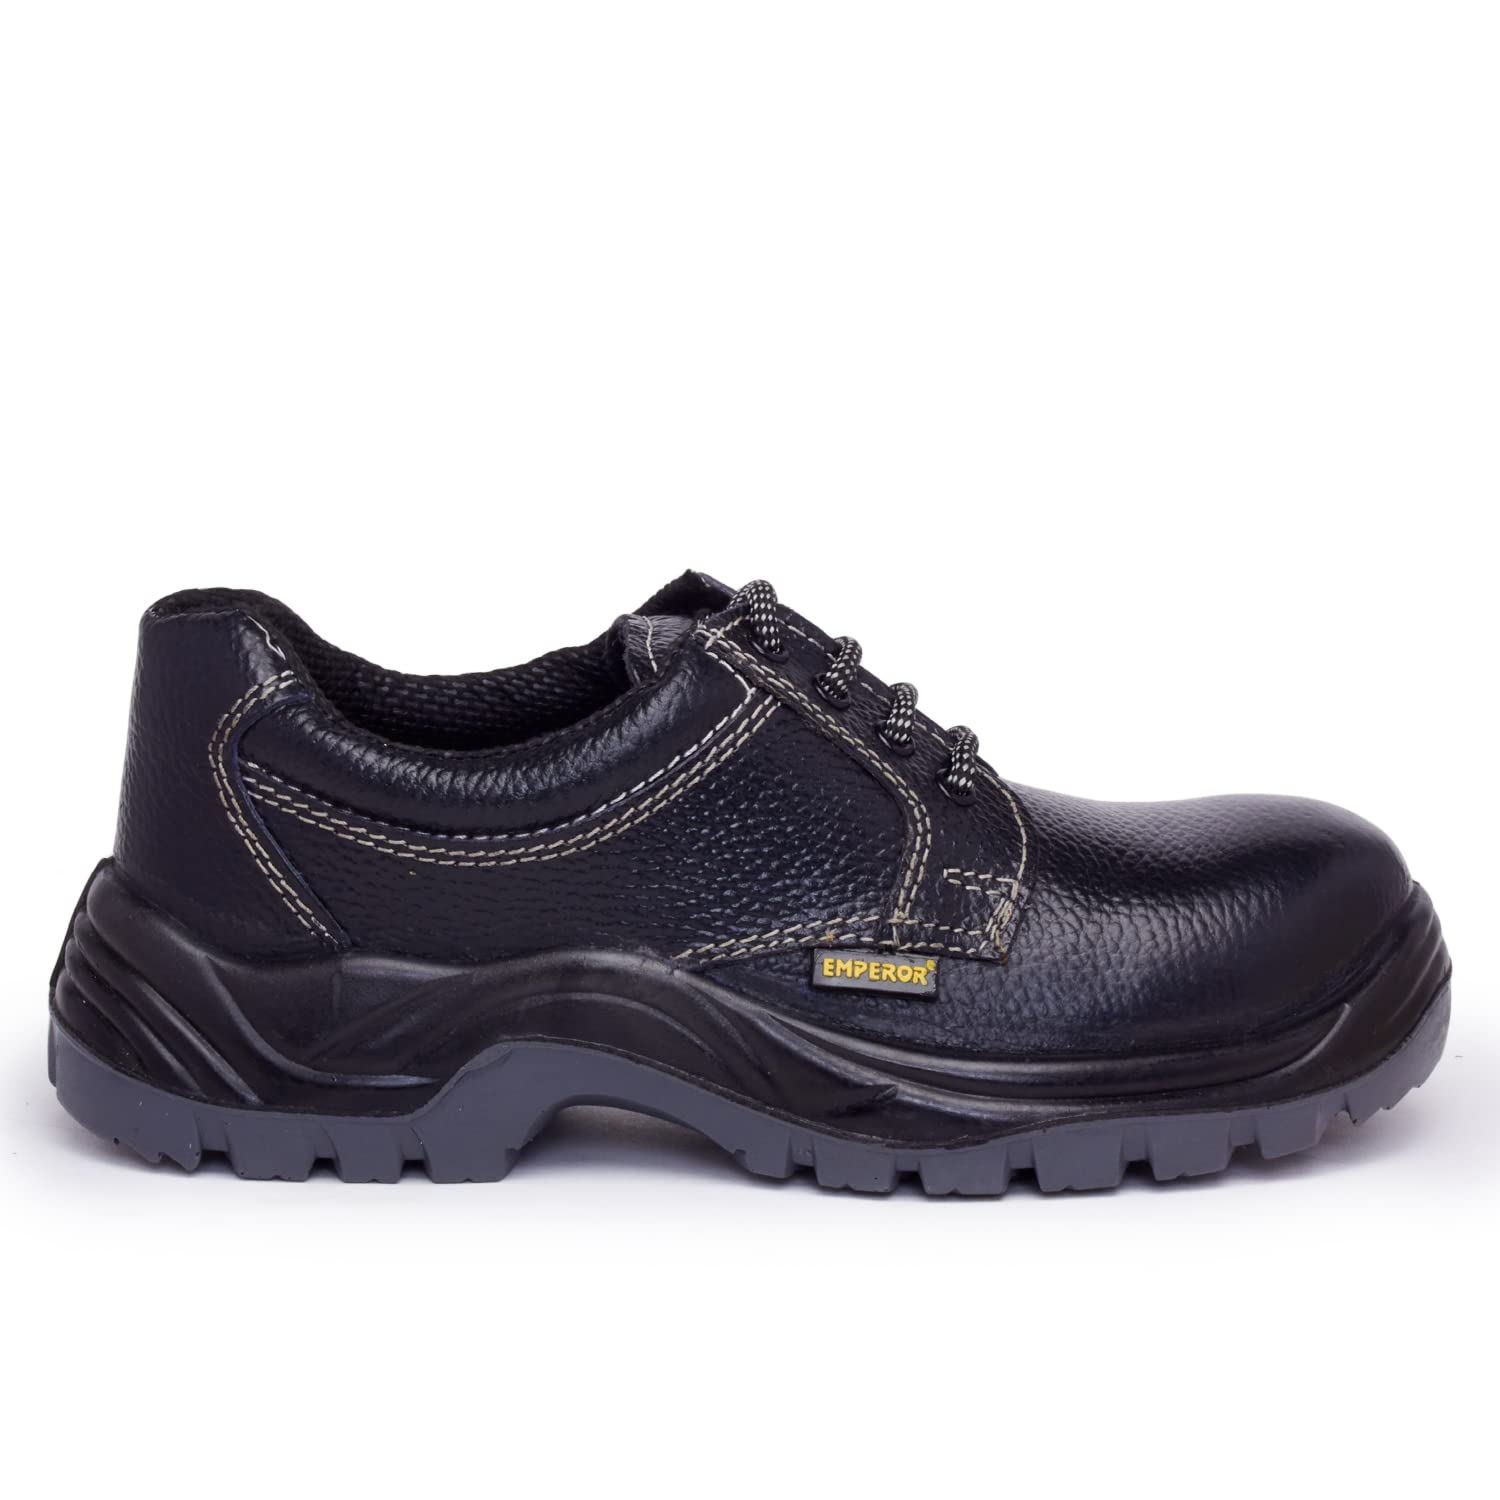 Emperor Steel Toe Leather Safety Shoe CZAR